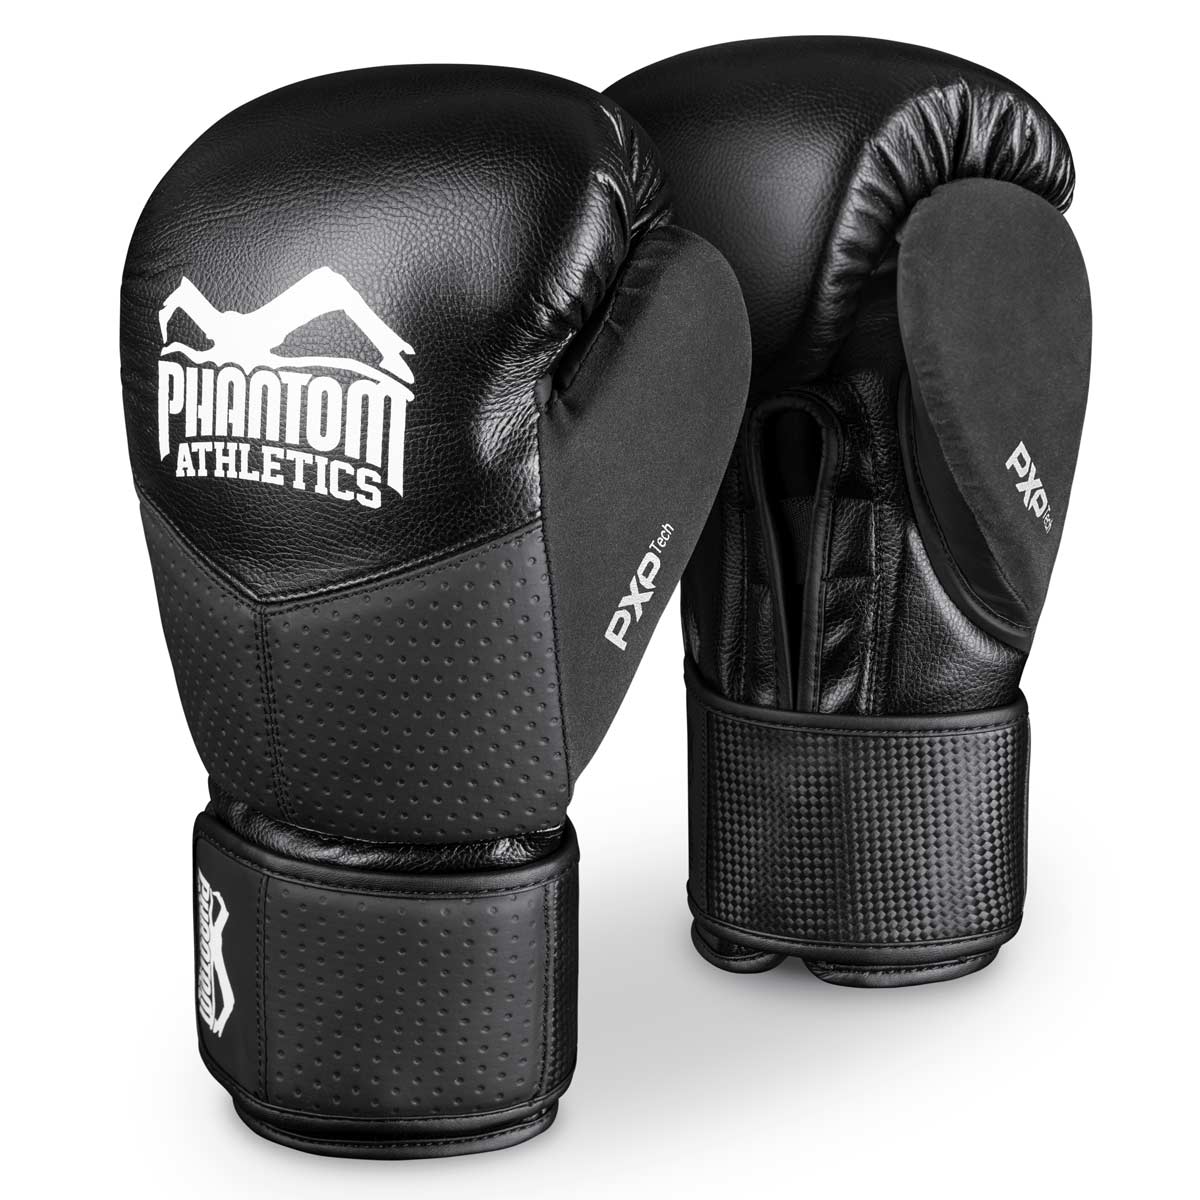 Buy boxing gloves for training & ATHLETICS PHANTOM - competition